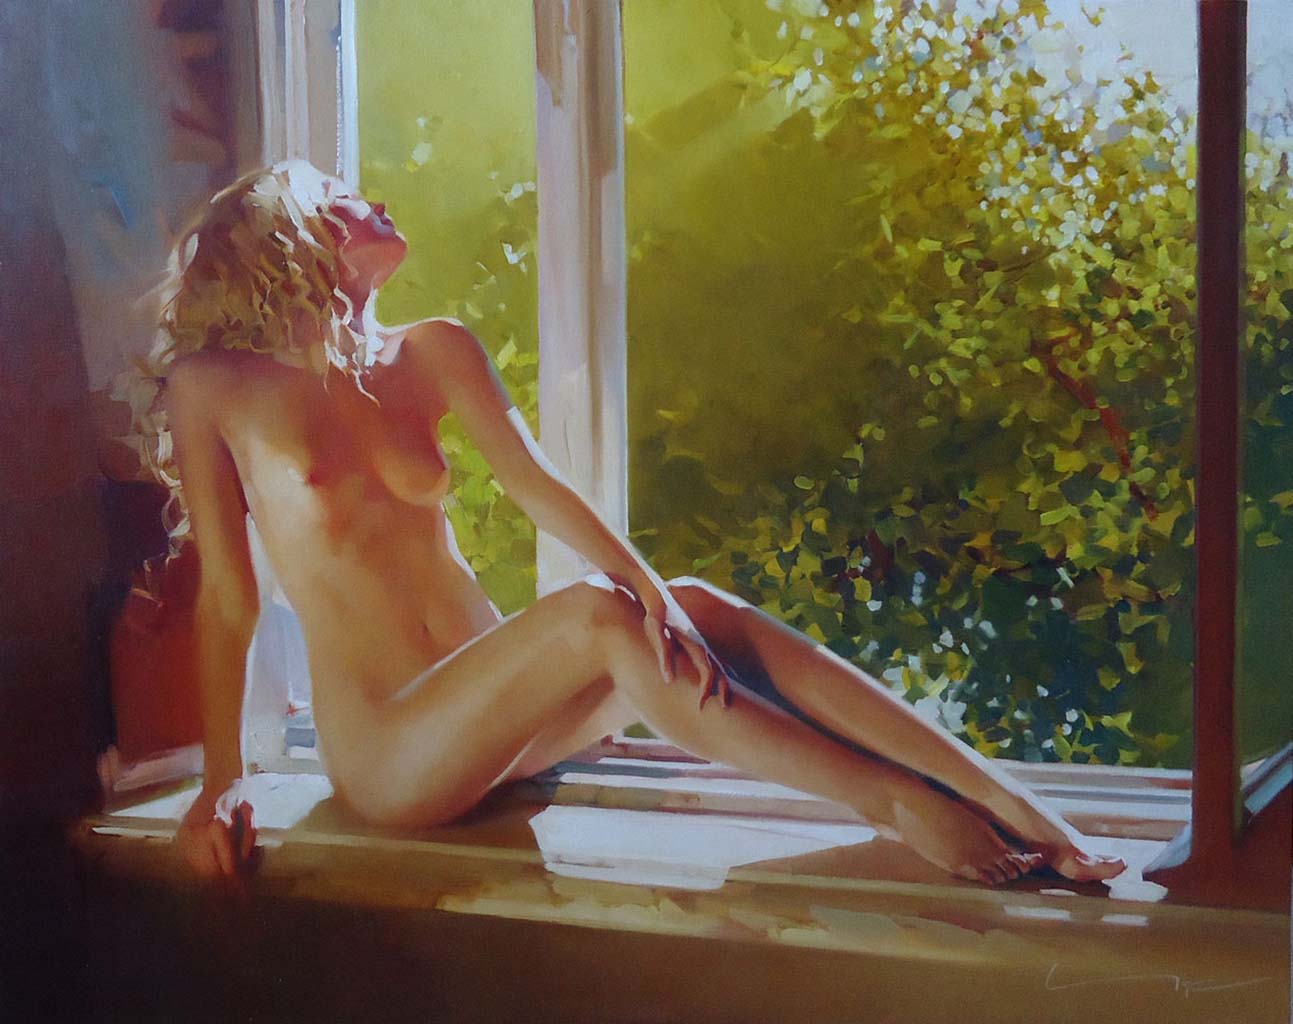 Алексей Чернигин (Alex Chernigin) “Window To The Garden“